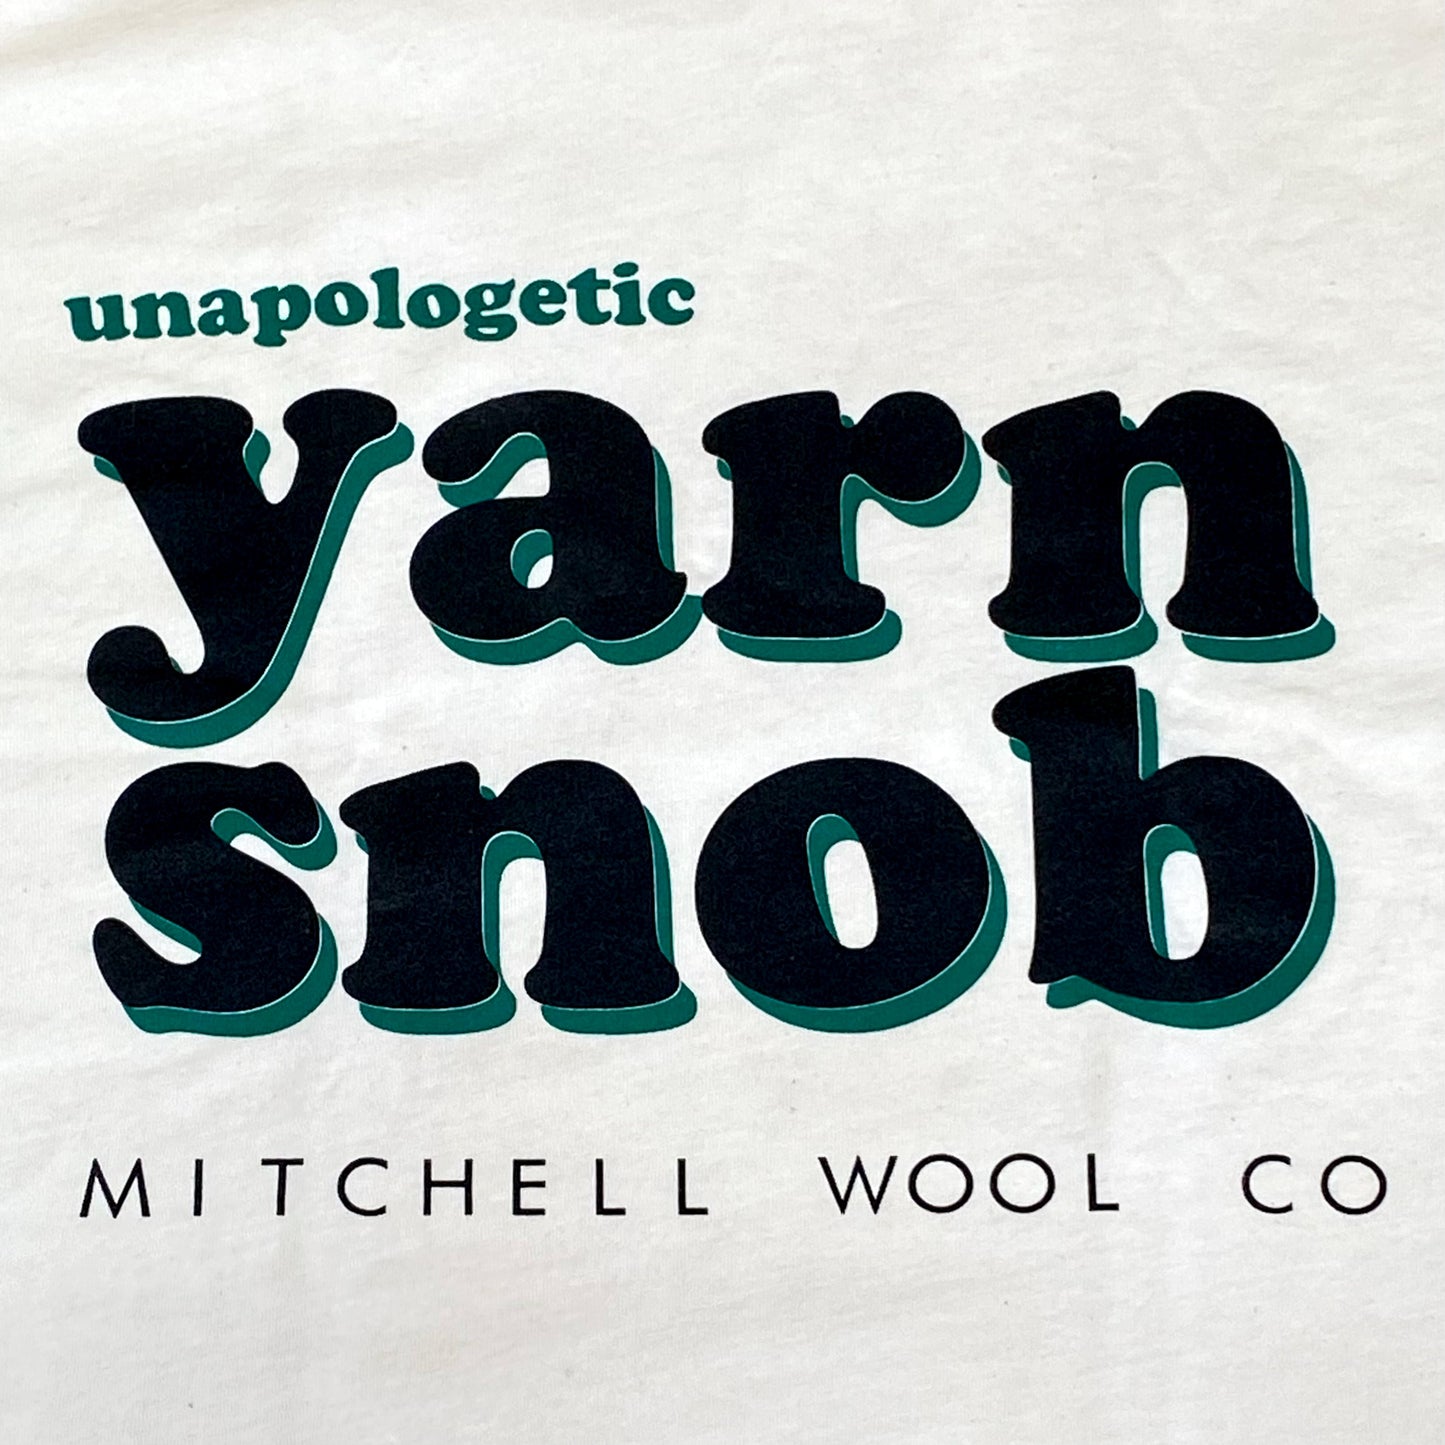 YARN SNOB - Natural Organic Cotton tee shirt